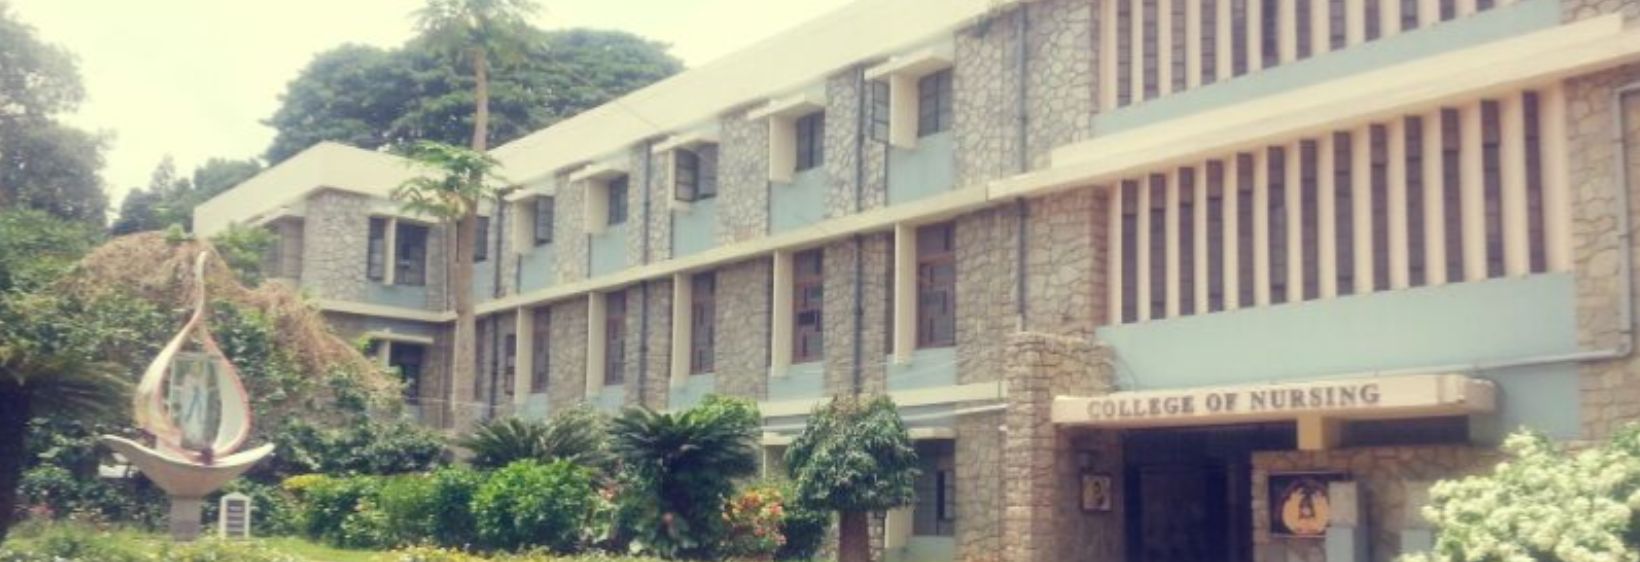 St Marthas Hospital College of Nursing - Bangalore